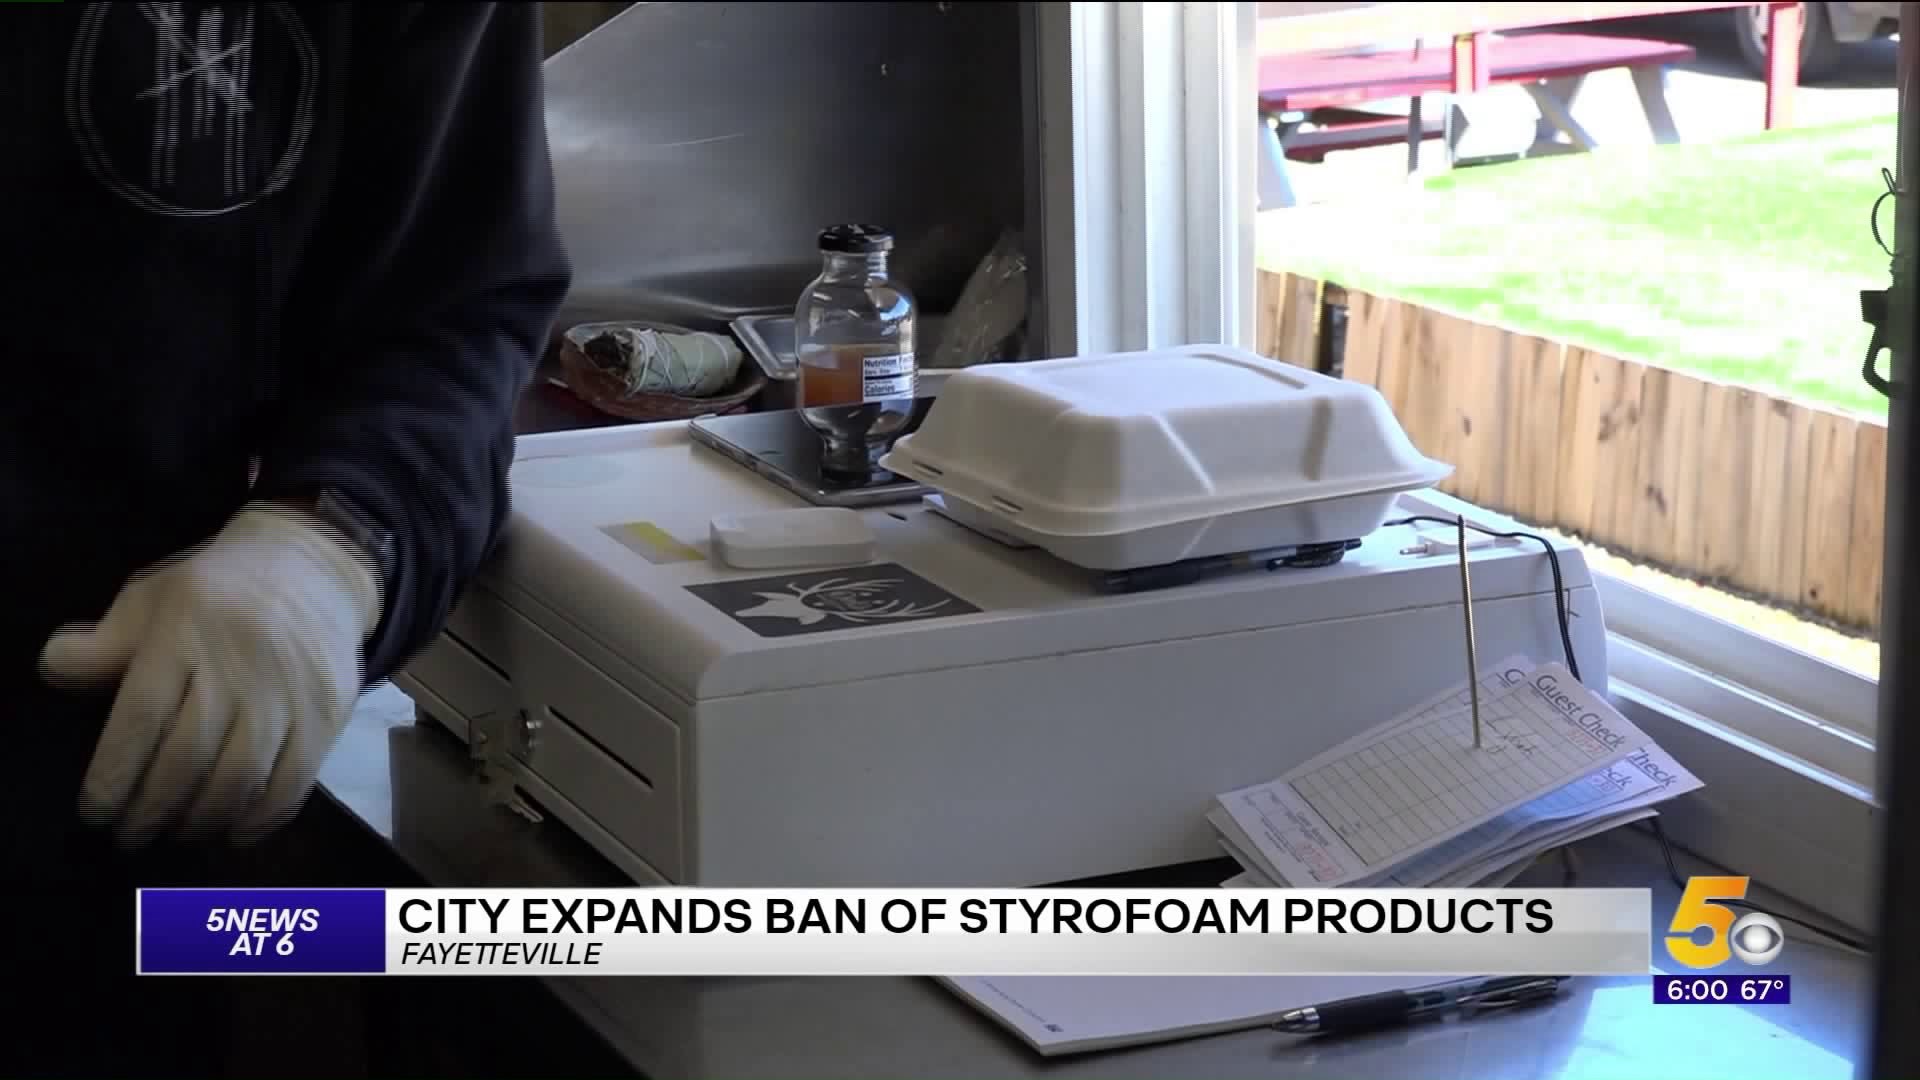 Fayetteville Expands Ban of Styrofoam